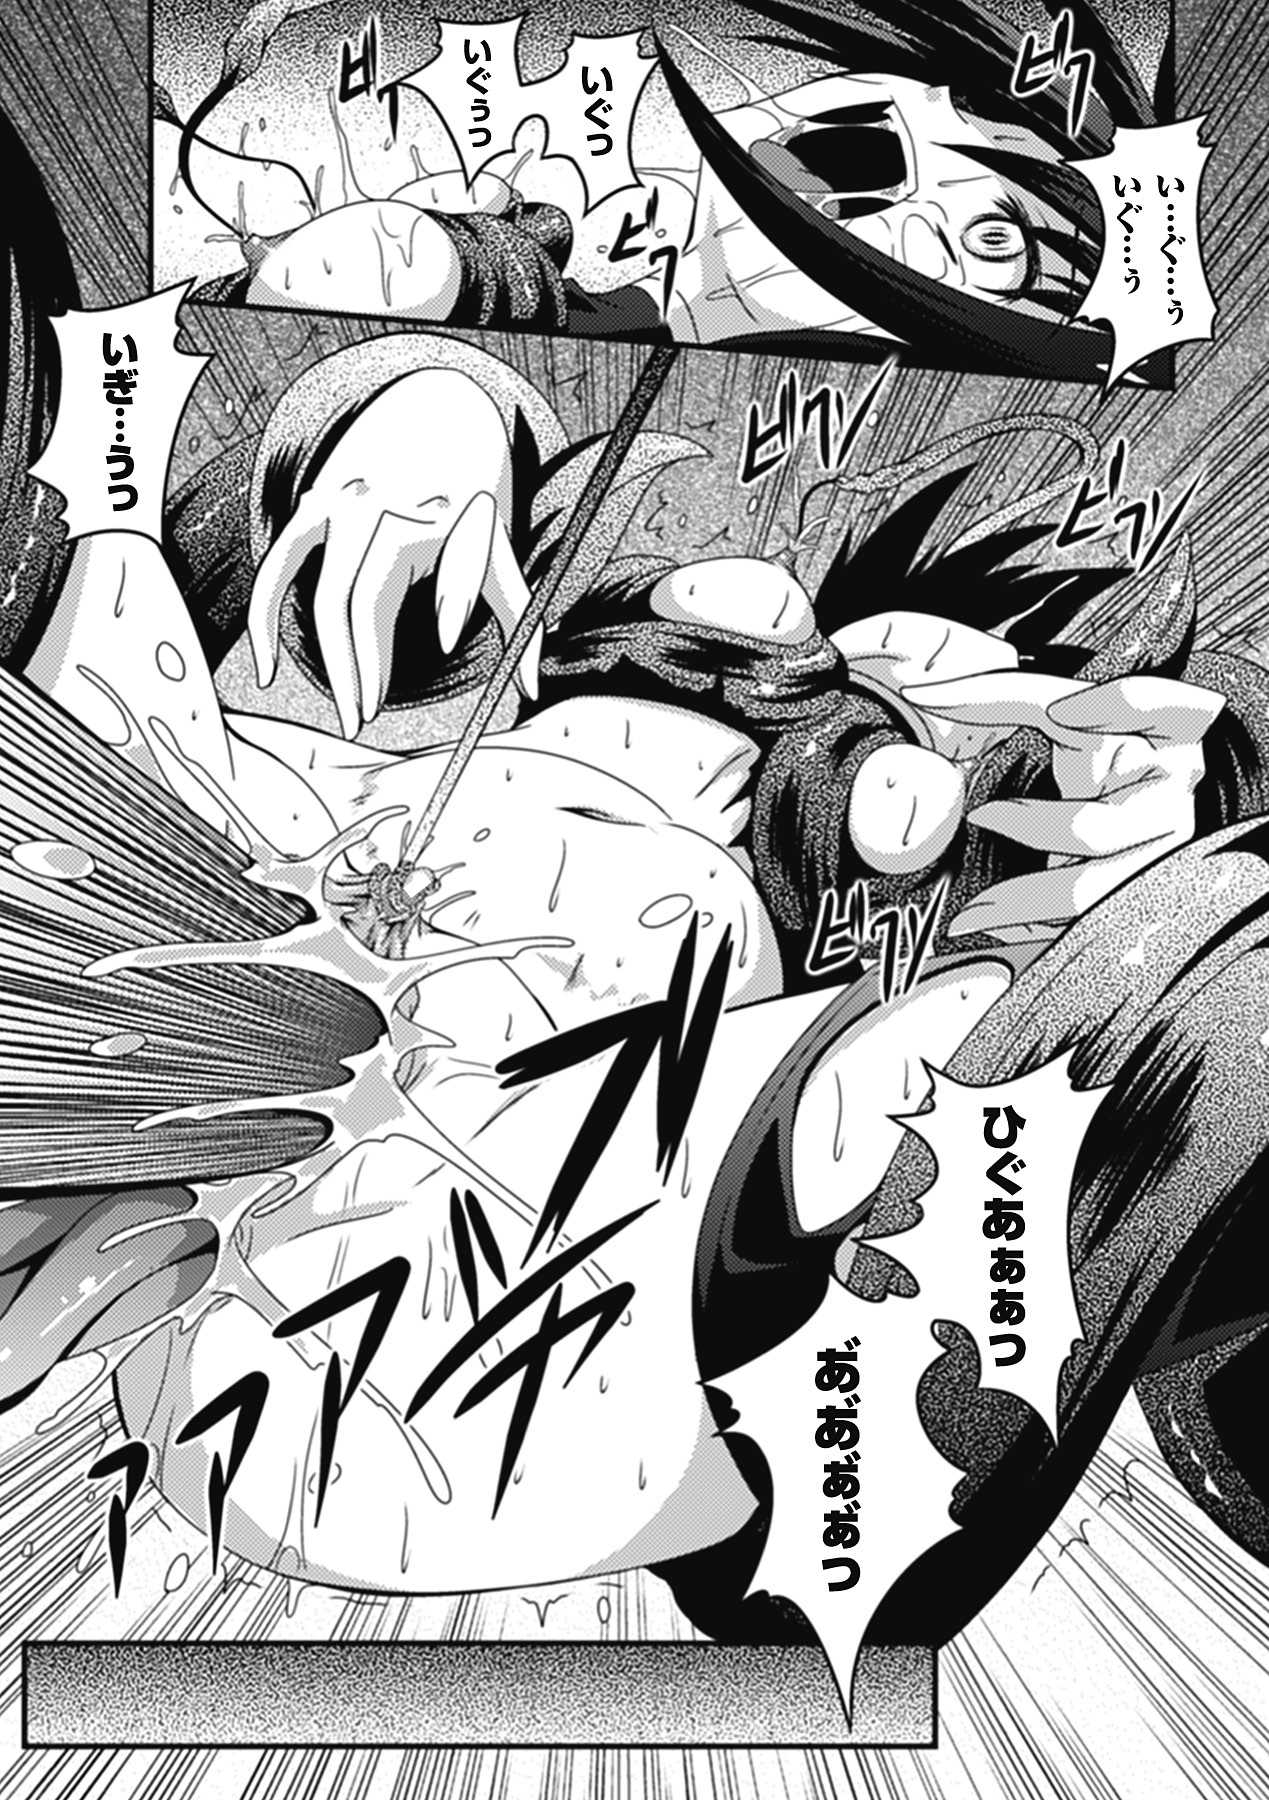 [Anthology] Megami Crisis Vol.4 Digital [アンソロジー] メガミクライシス Vol.4 デジタル版